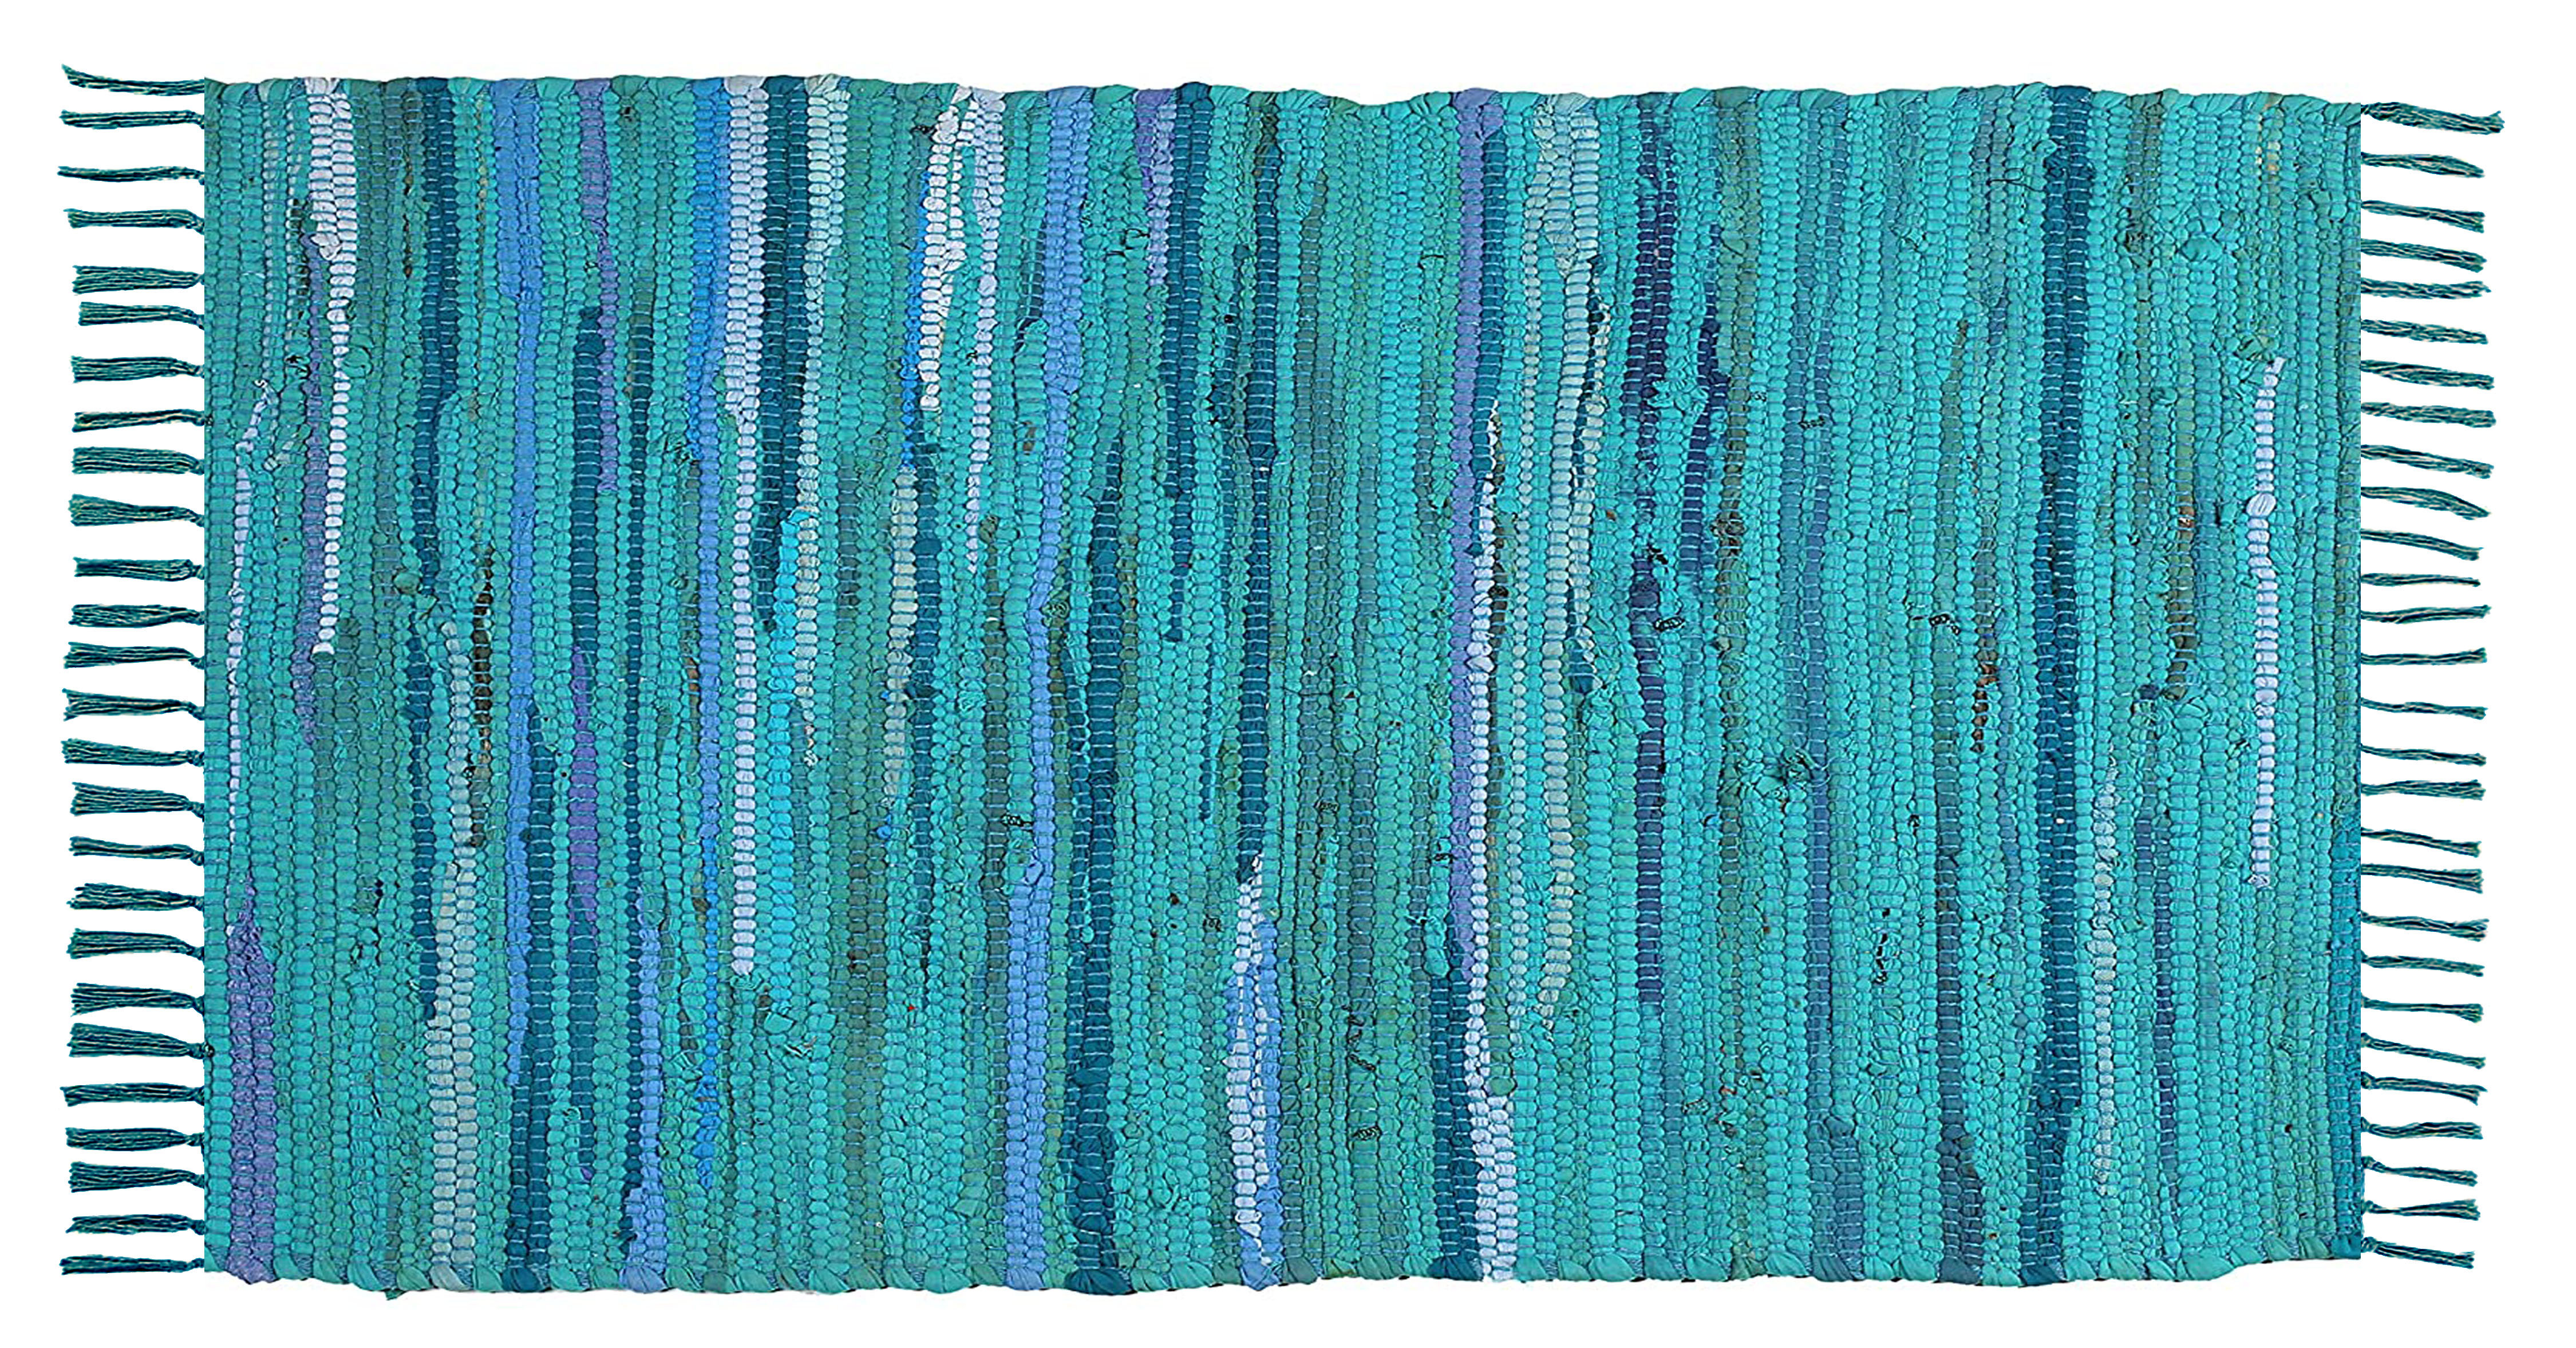 Vibrant Hand Braided Cotton-Jute-Denim Chindi Reversible Area Rugs Multi Color 